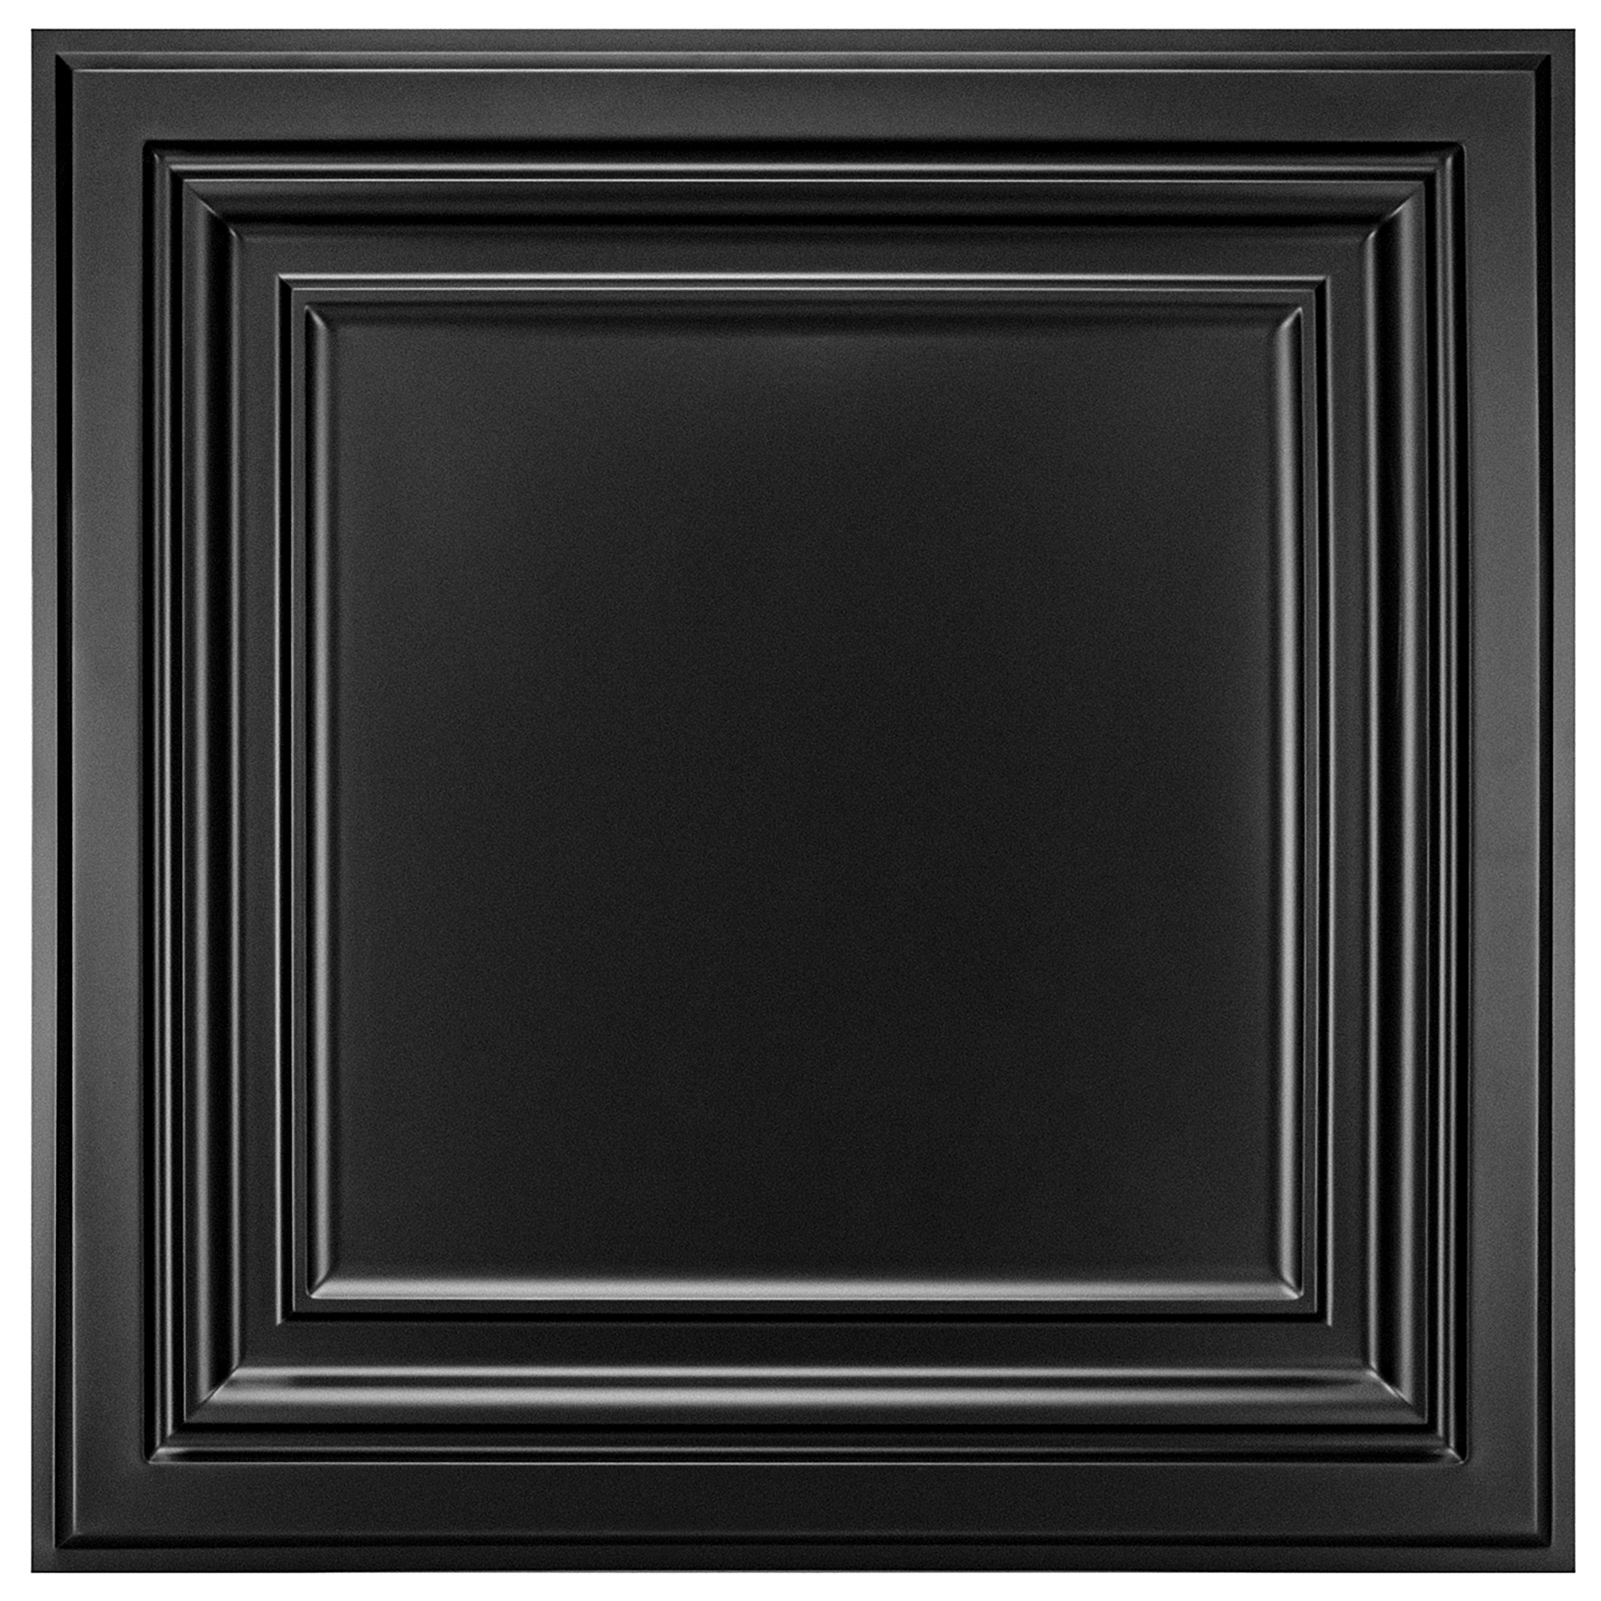 A10905P12BK-Art3d PVC Ceiling Tiles, 2'x2' Plastic Sheet in Black (12-Pack,48sq ft)